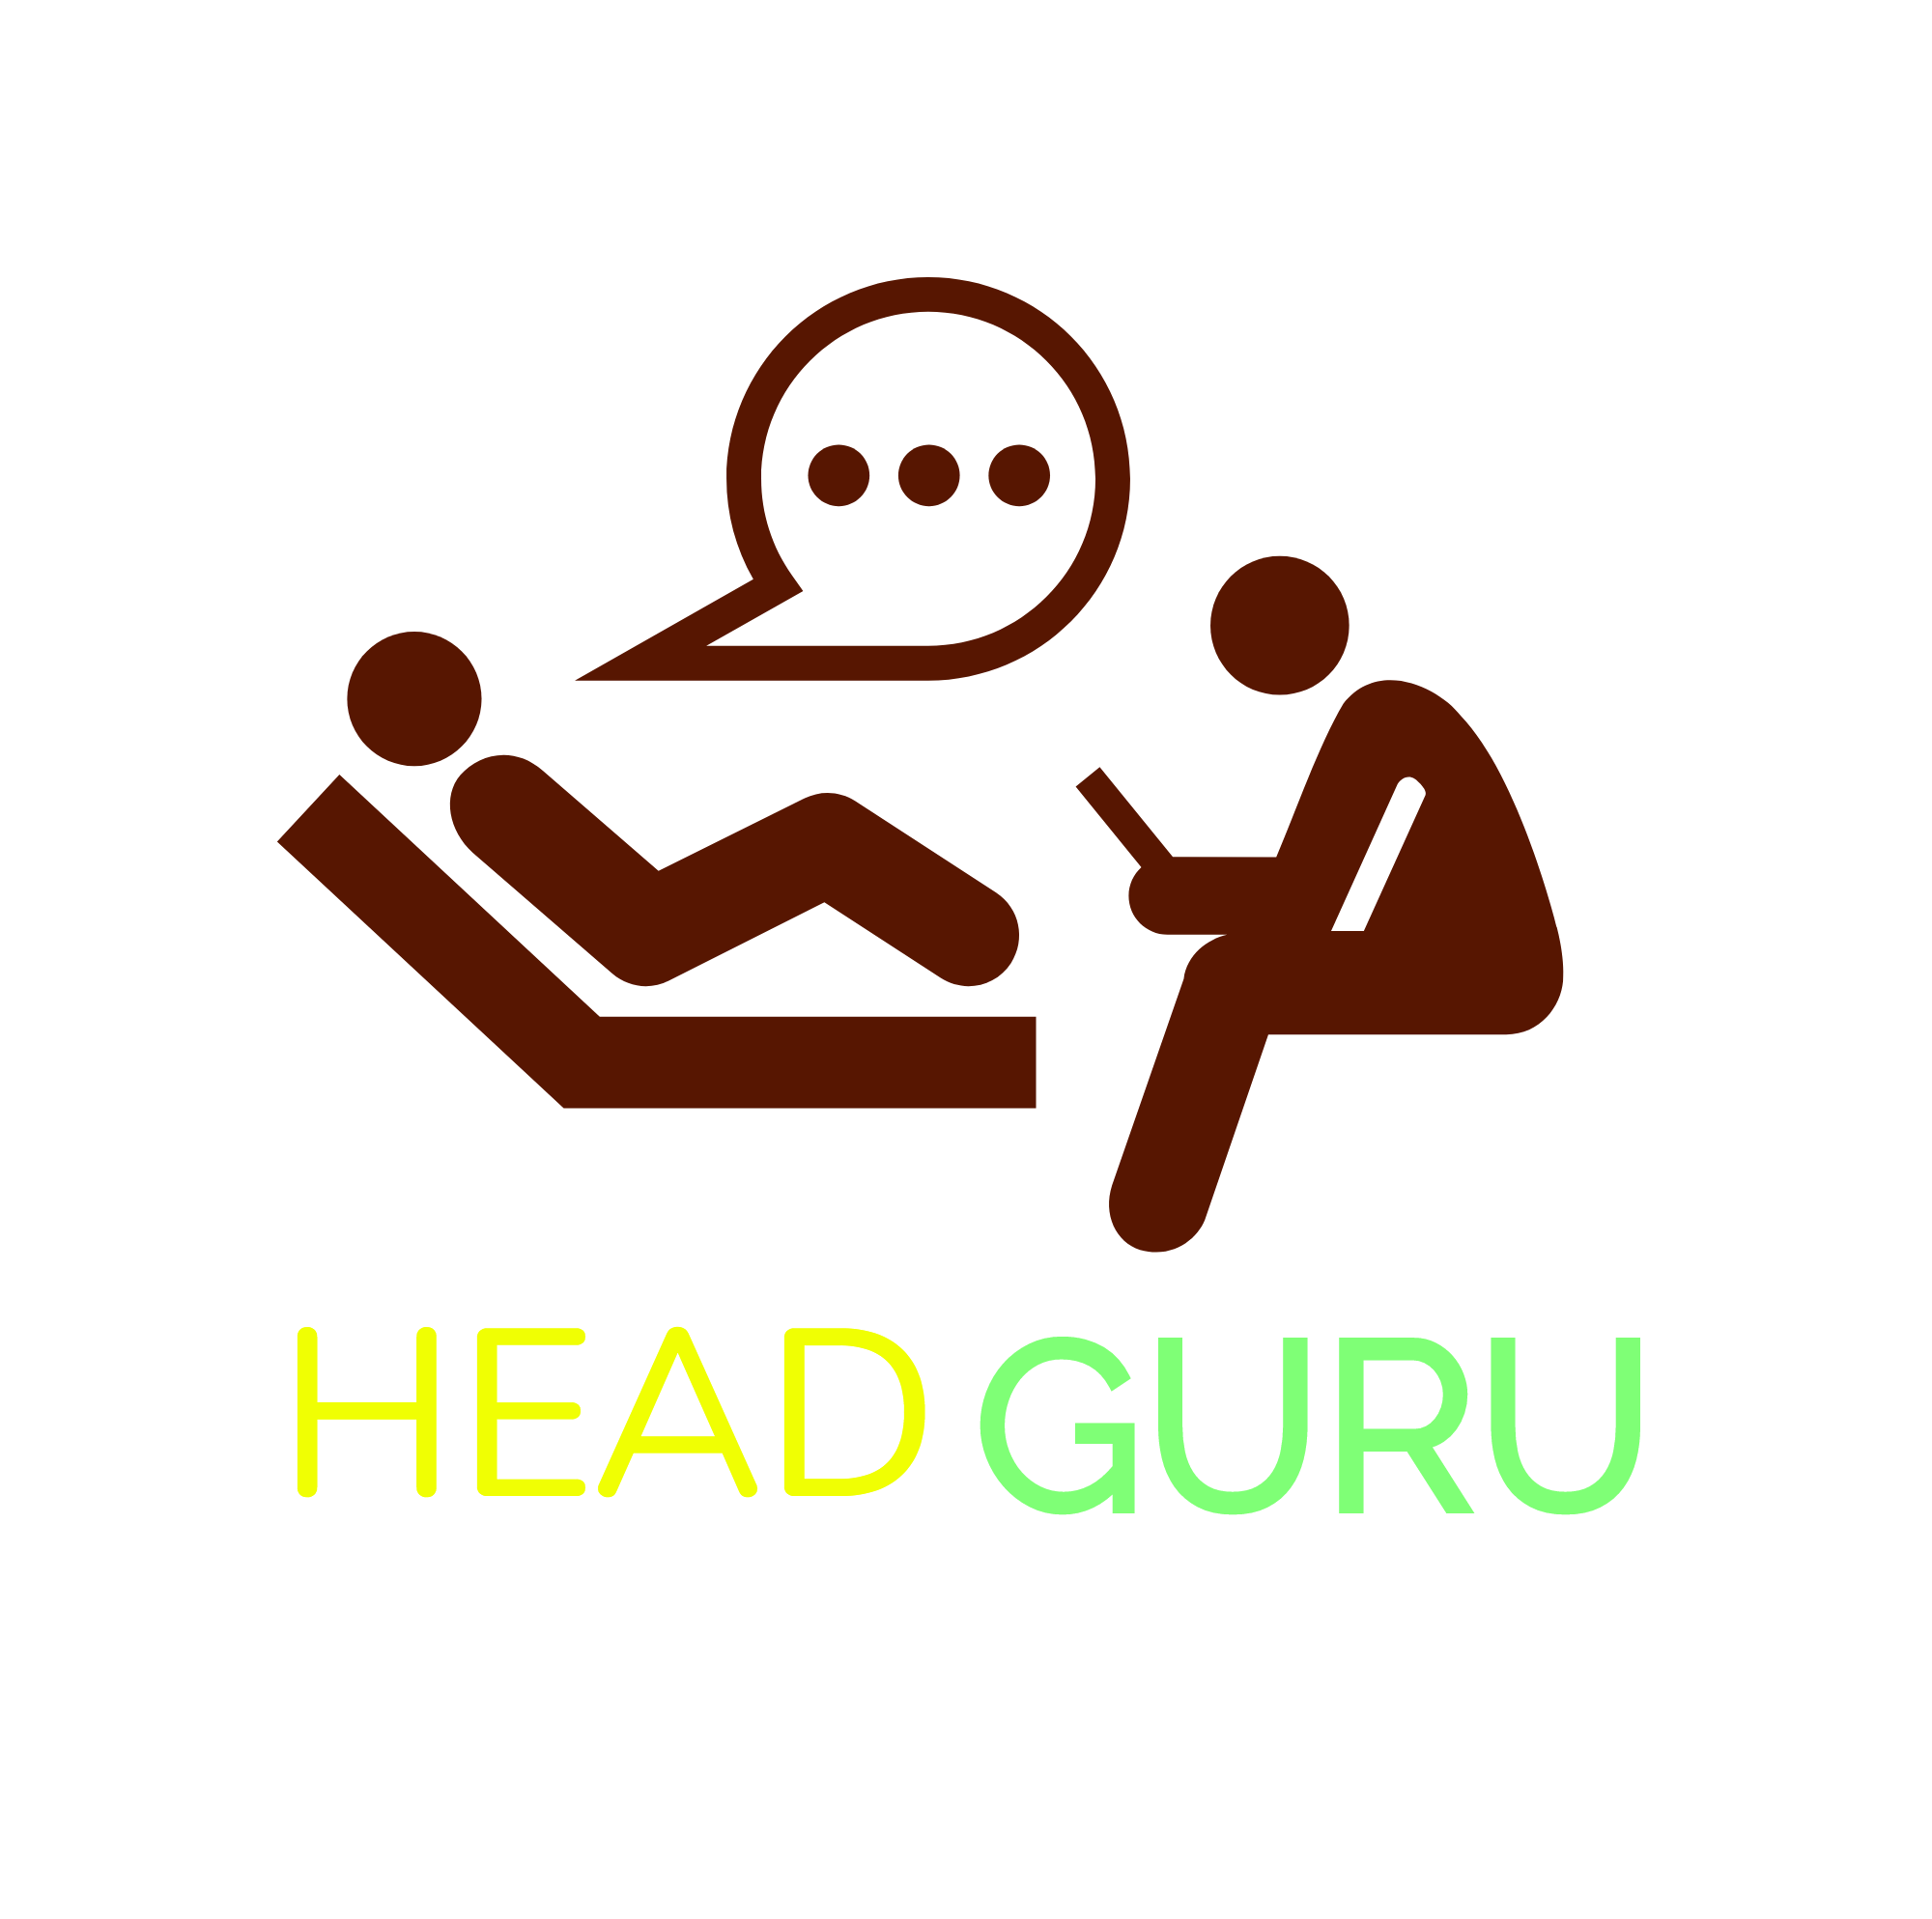 HEAD GURU (Copy)